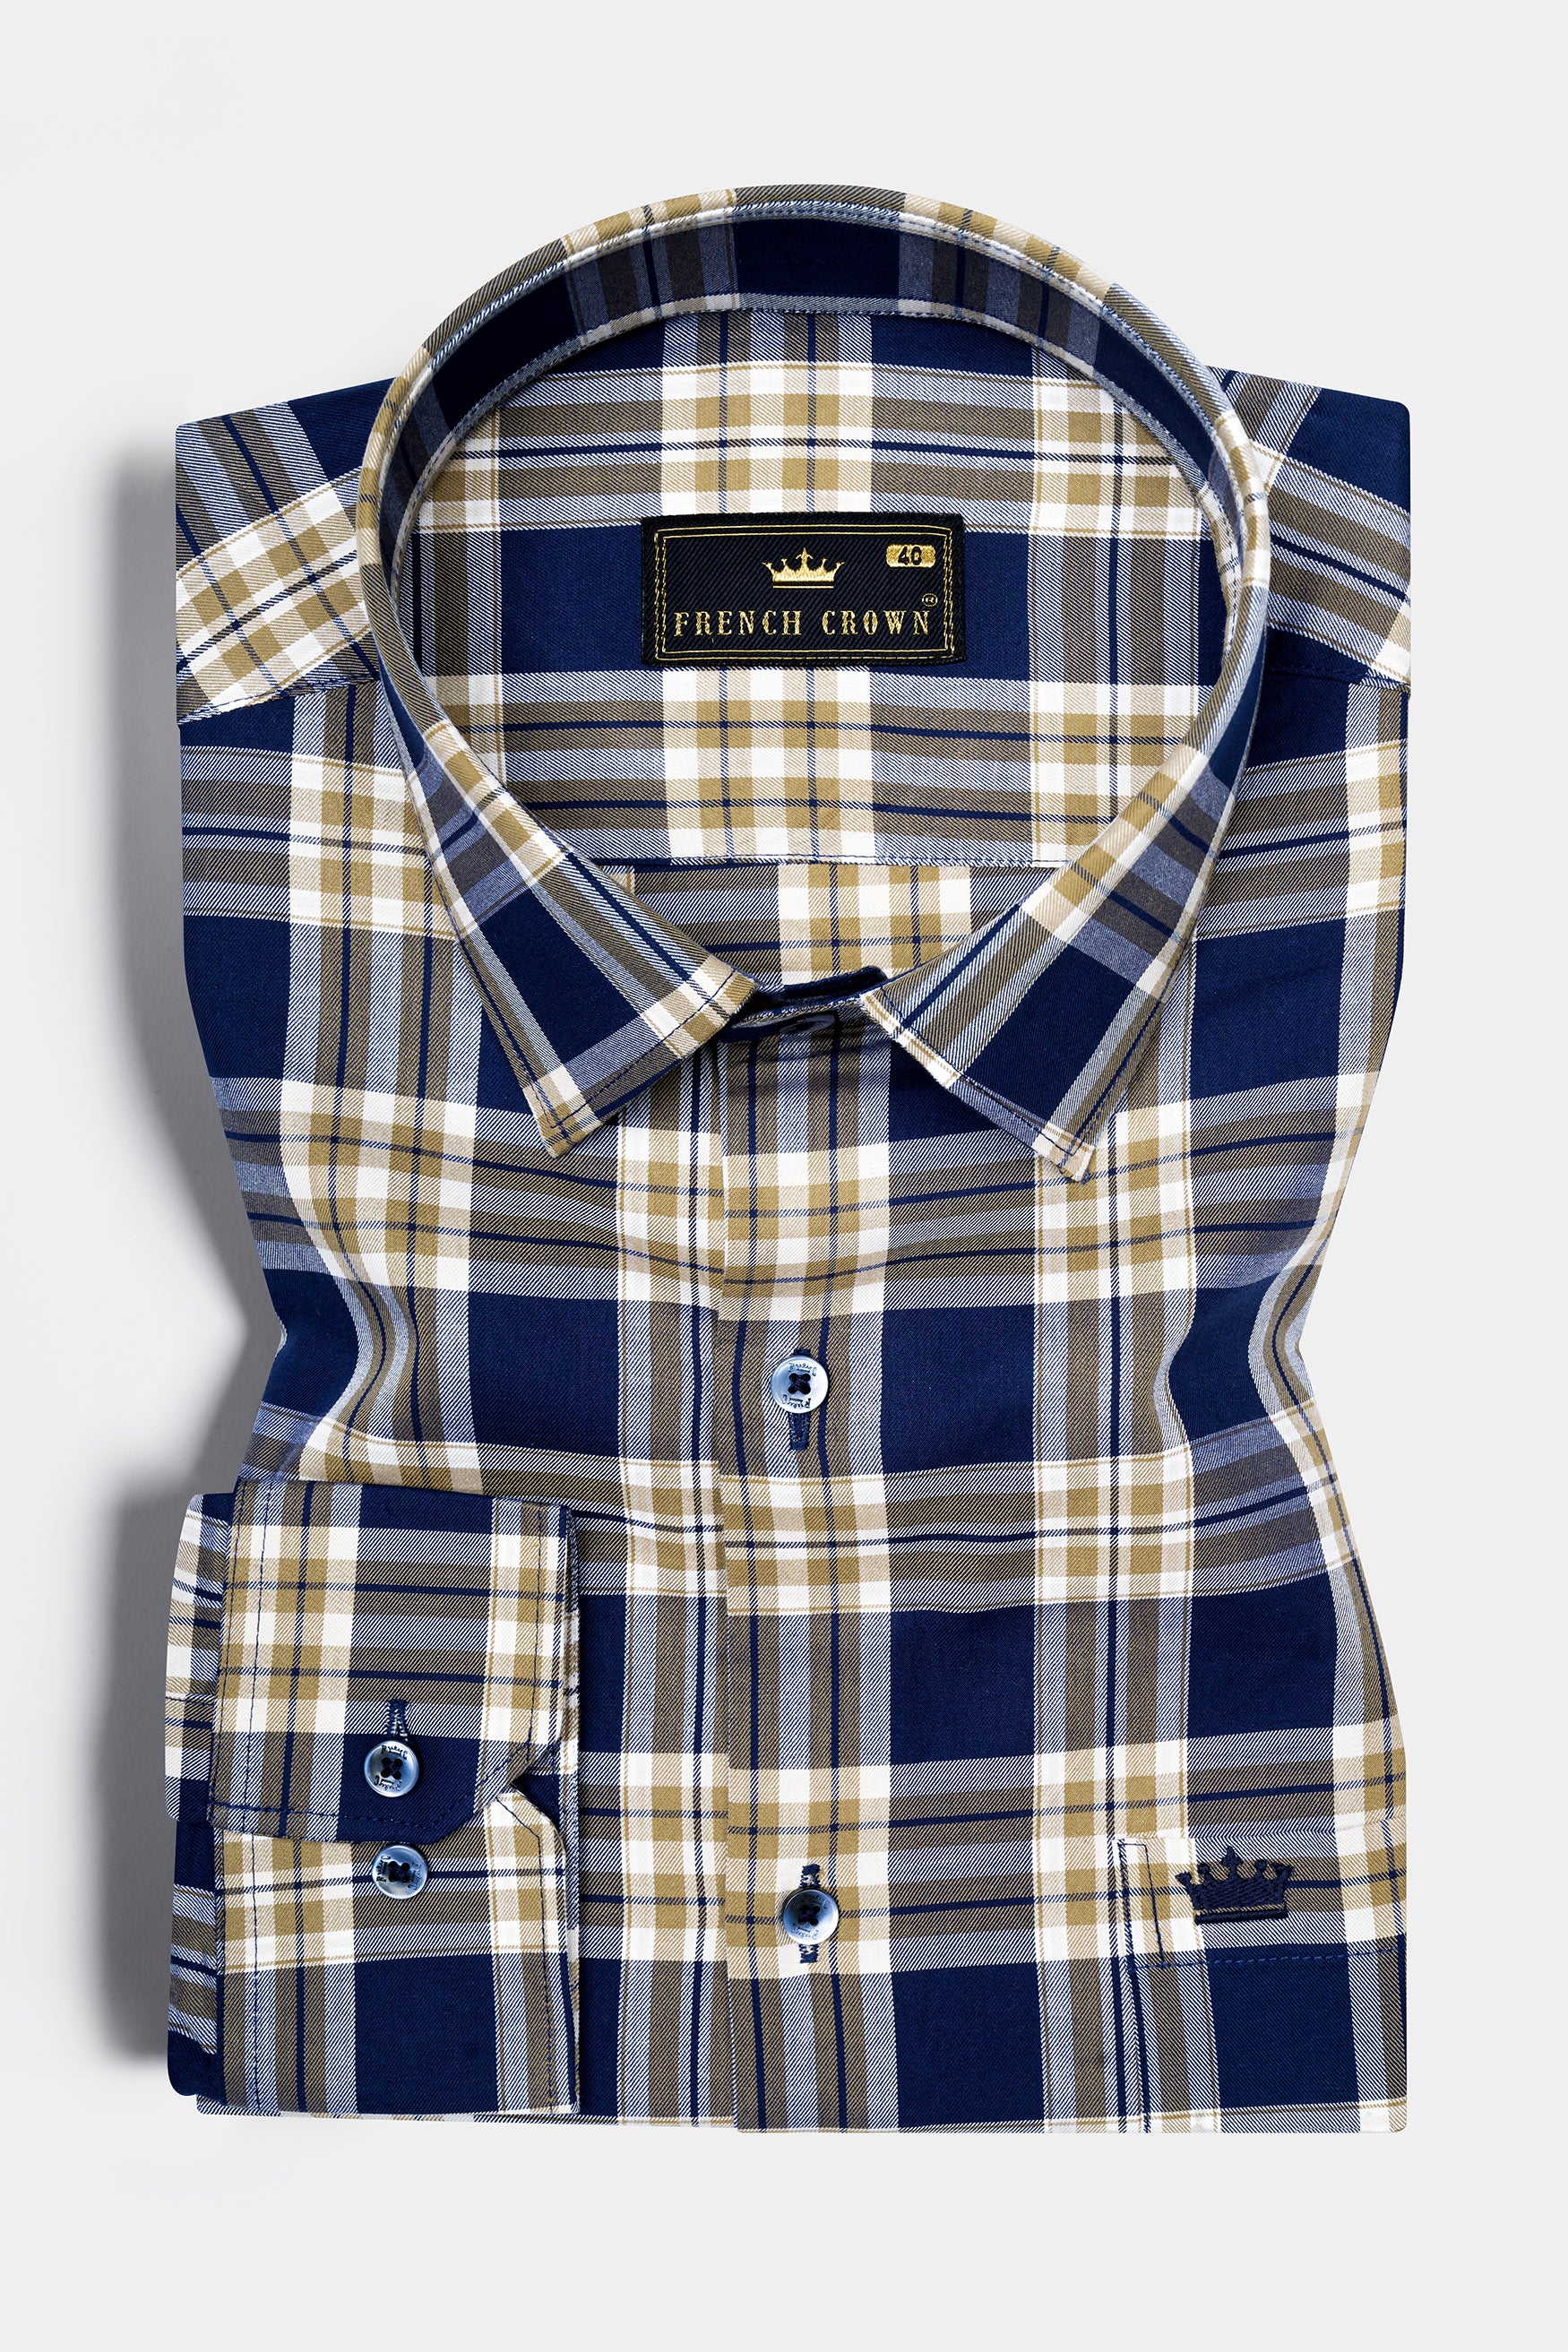 Tealish Blue Shadow Brown Plaid Twill Premium Cotton Shirt